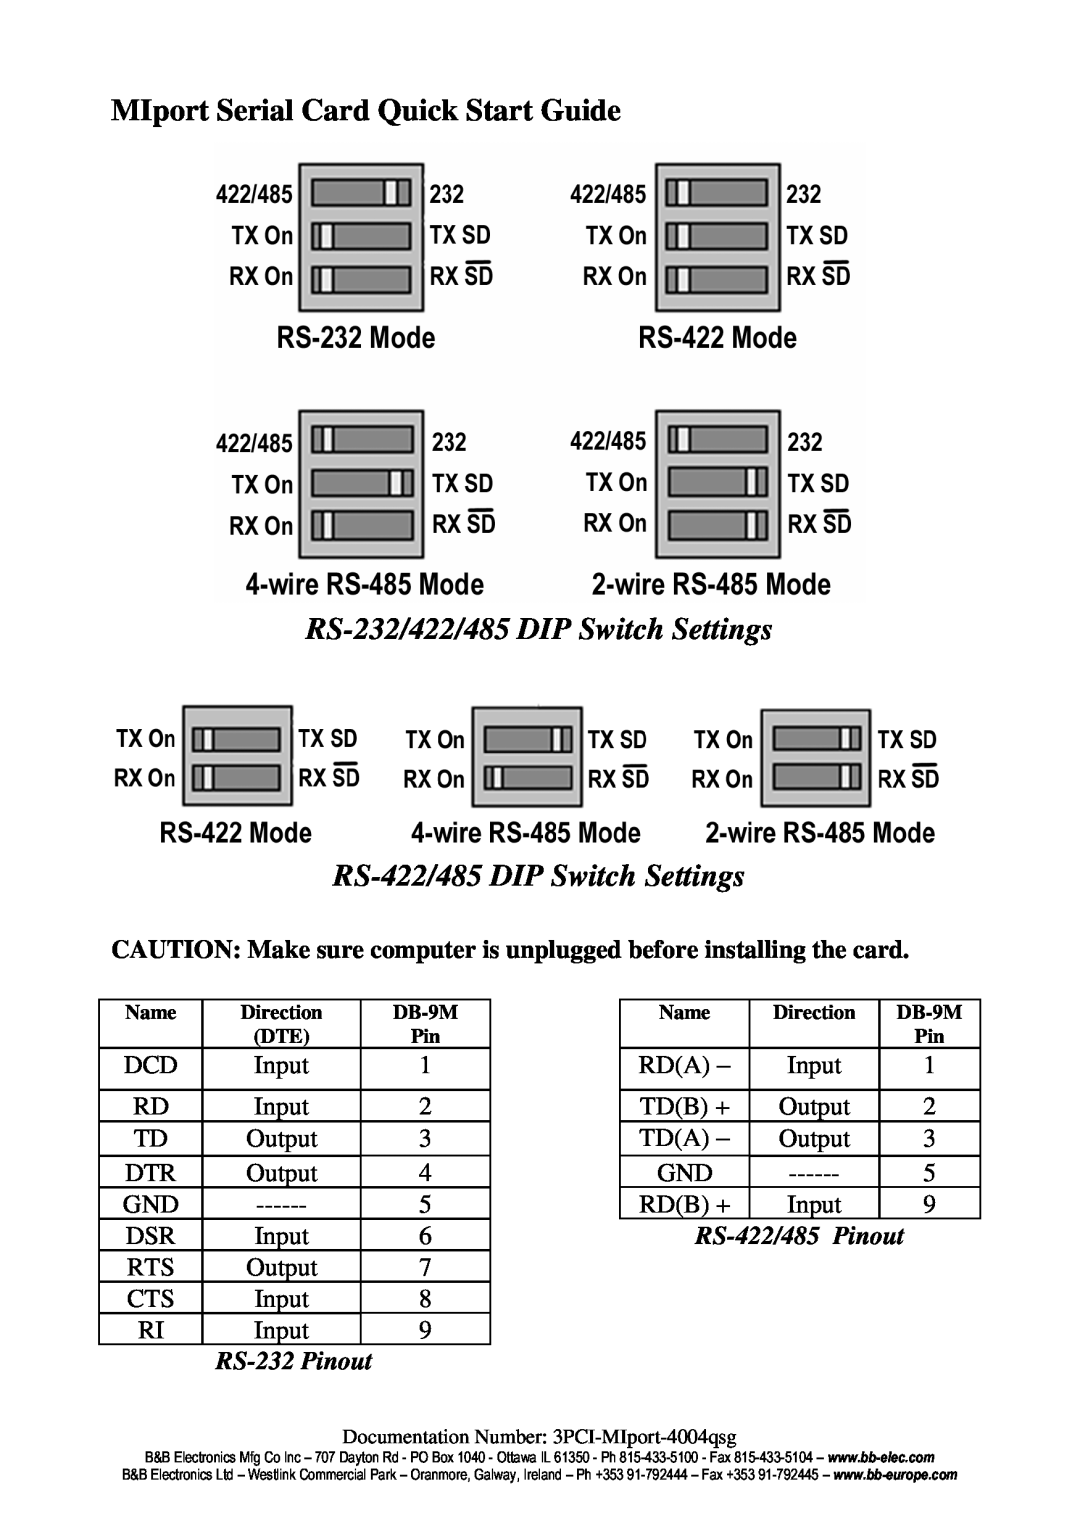 B&B Electronics 3PCIU2, 3PCIOU1, 3PCIU4, 3PCIOU2 MIport Serial Card Quick Start Guide, RS-232 Pinout, RS-422/485 Pinout 